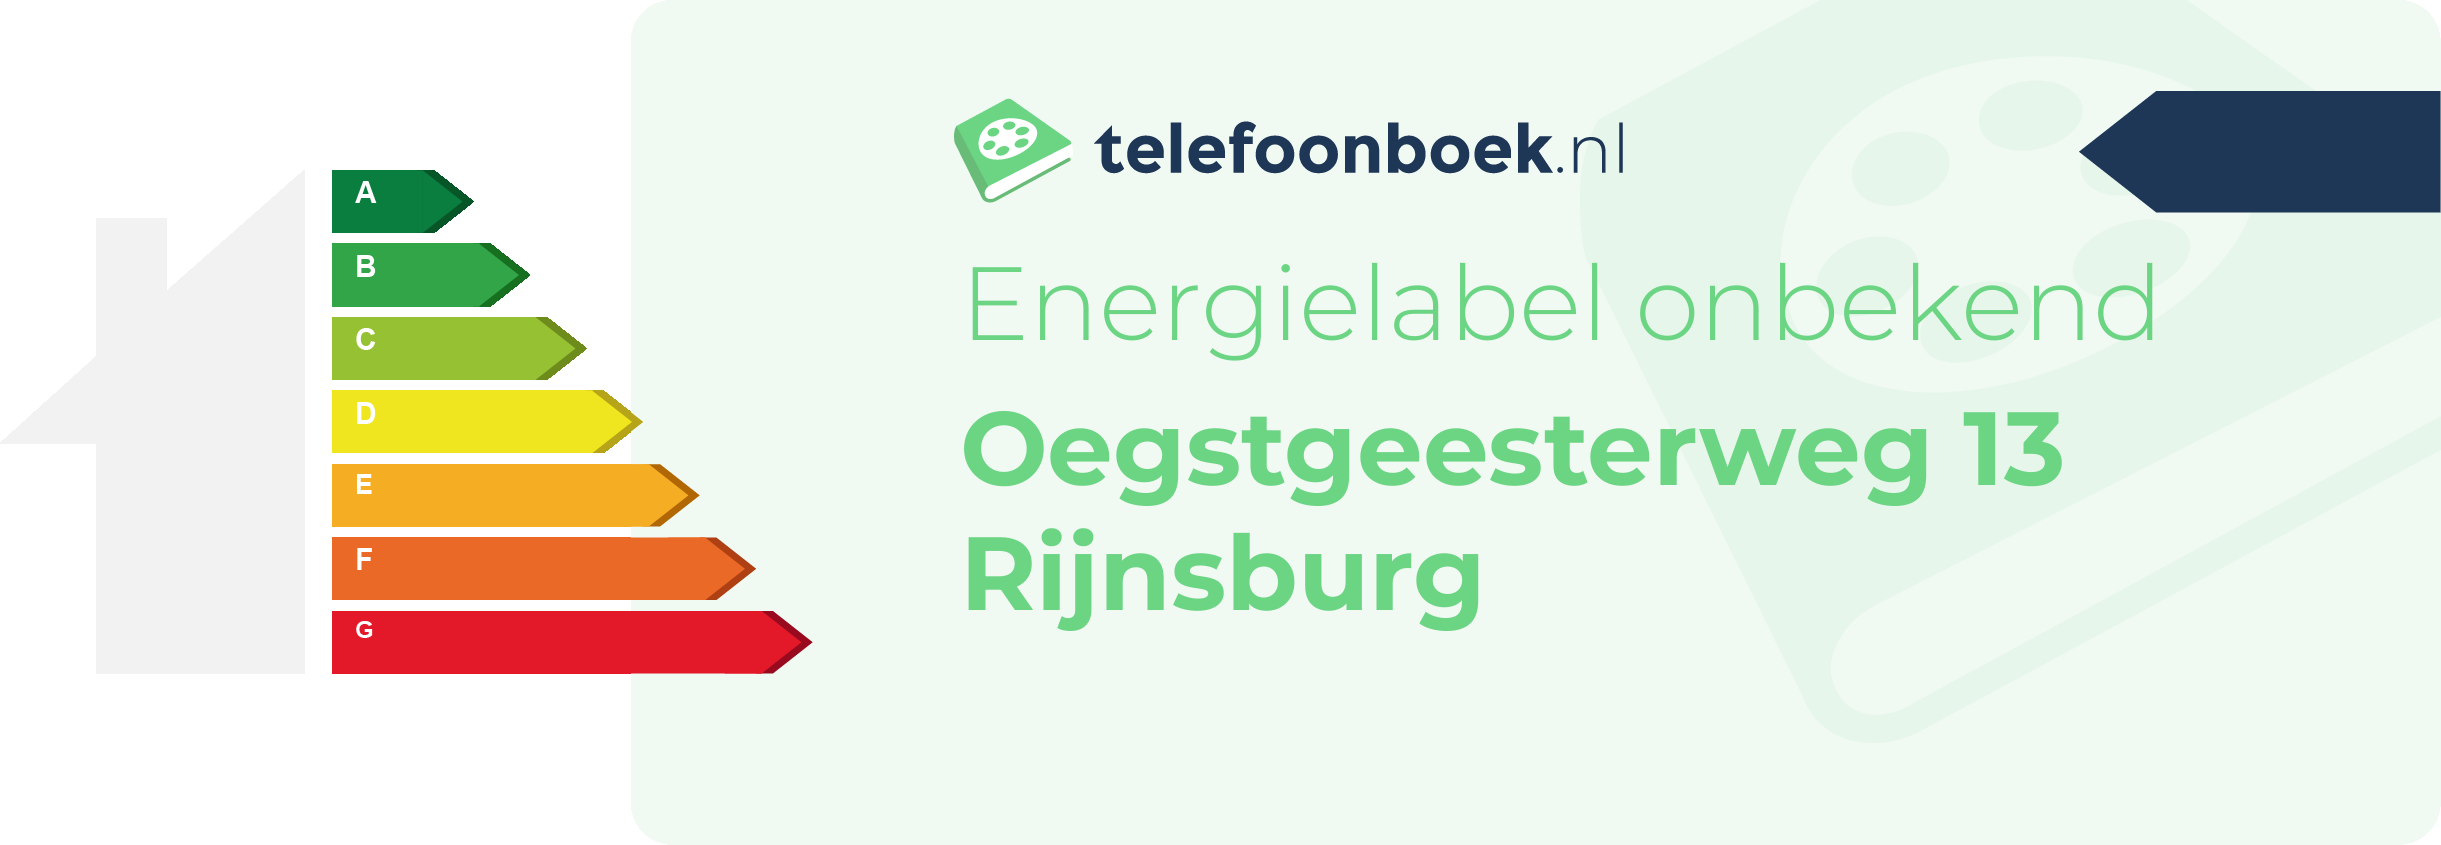 Energielabel Oegstgeesterweg 13 Rijnsburg